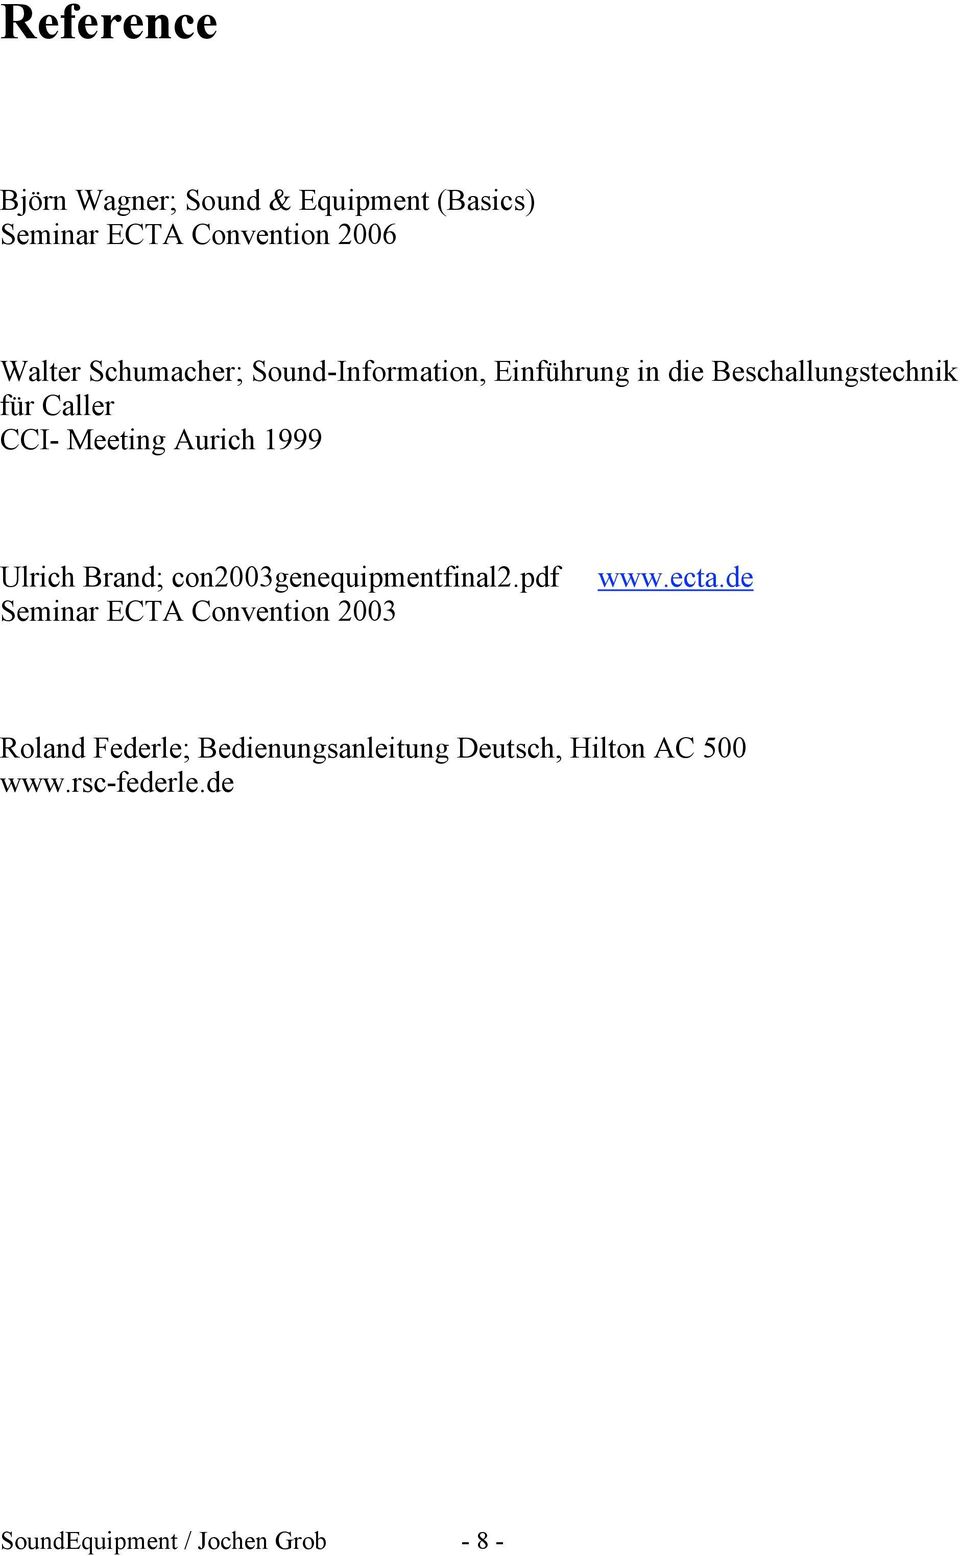 Aurich 1999 Ulrich Brand; con2003genequipmentfinal2.pdf Seminar ECTA Convention 2003 www.ecta.